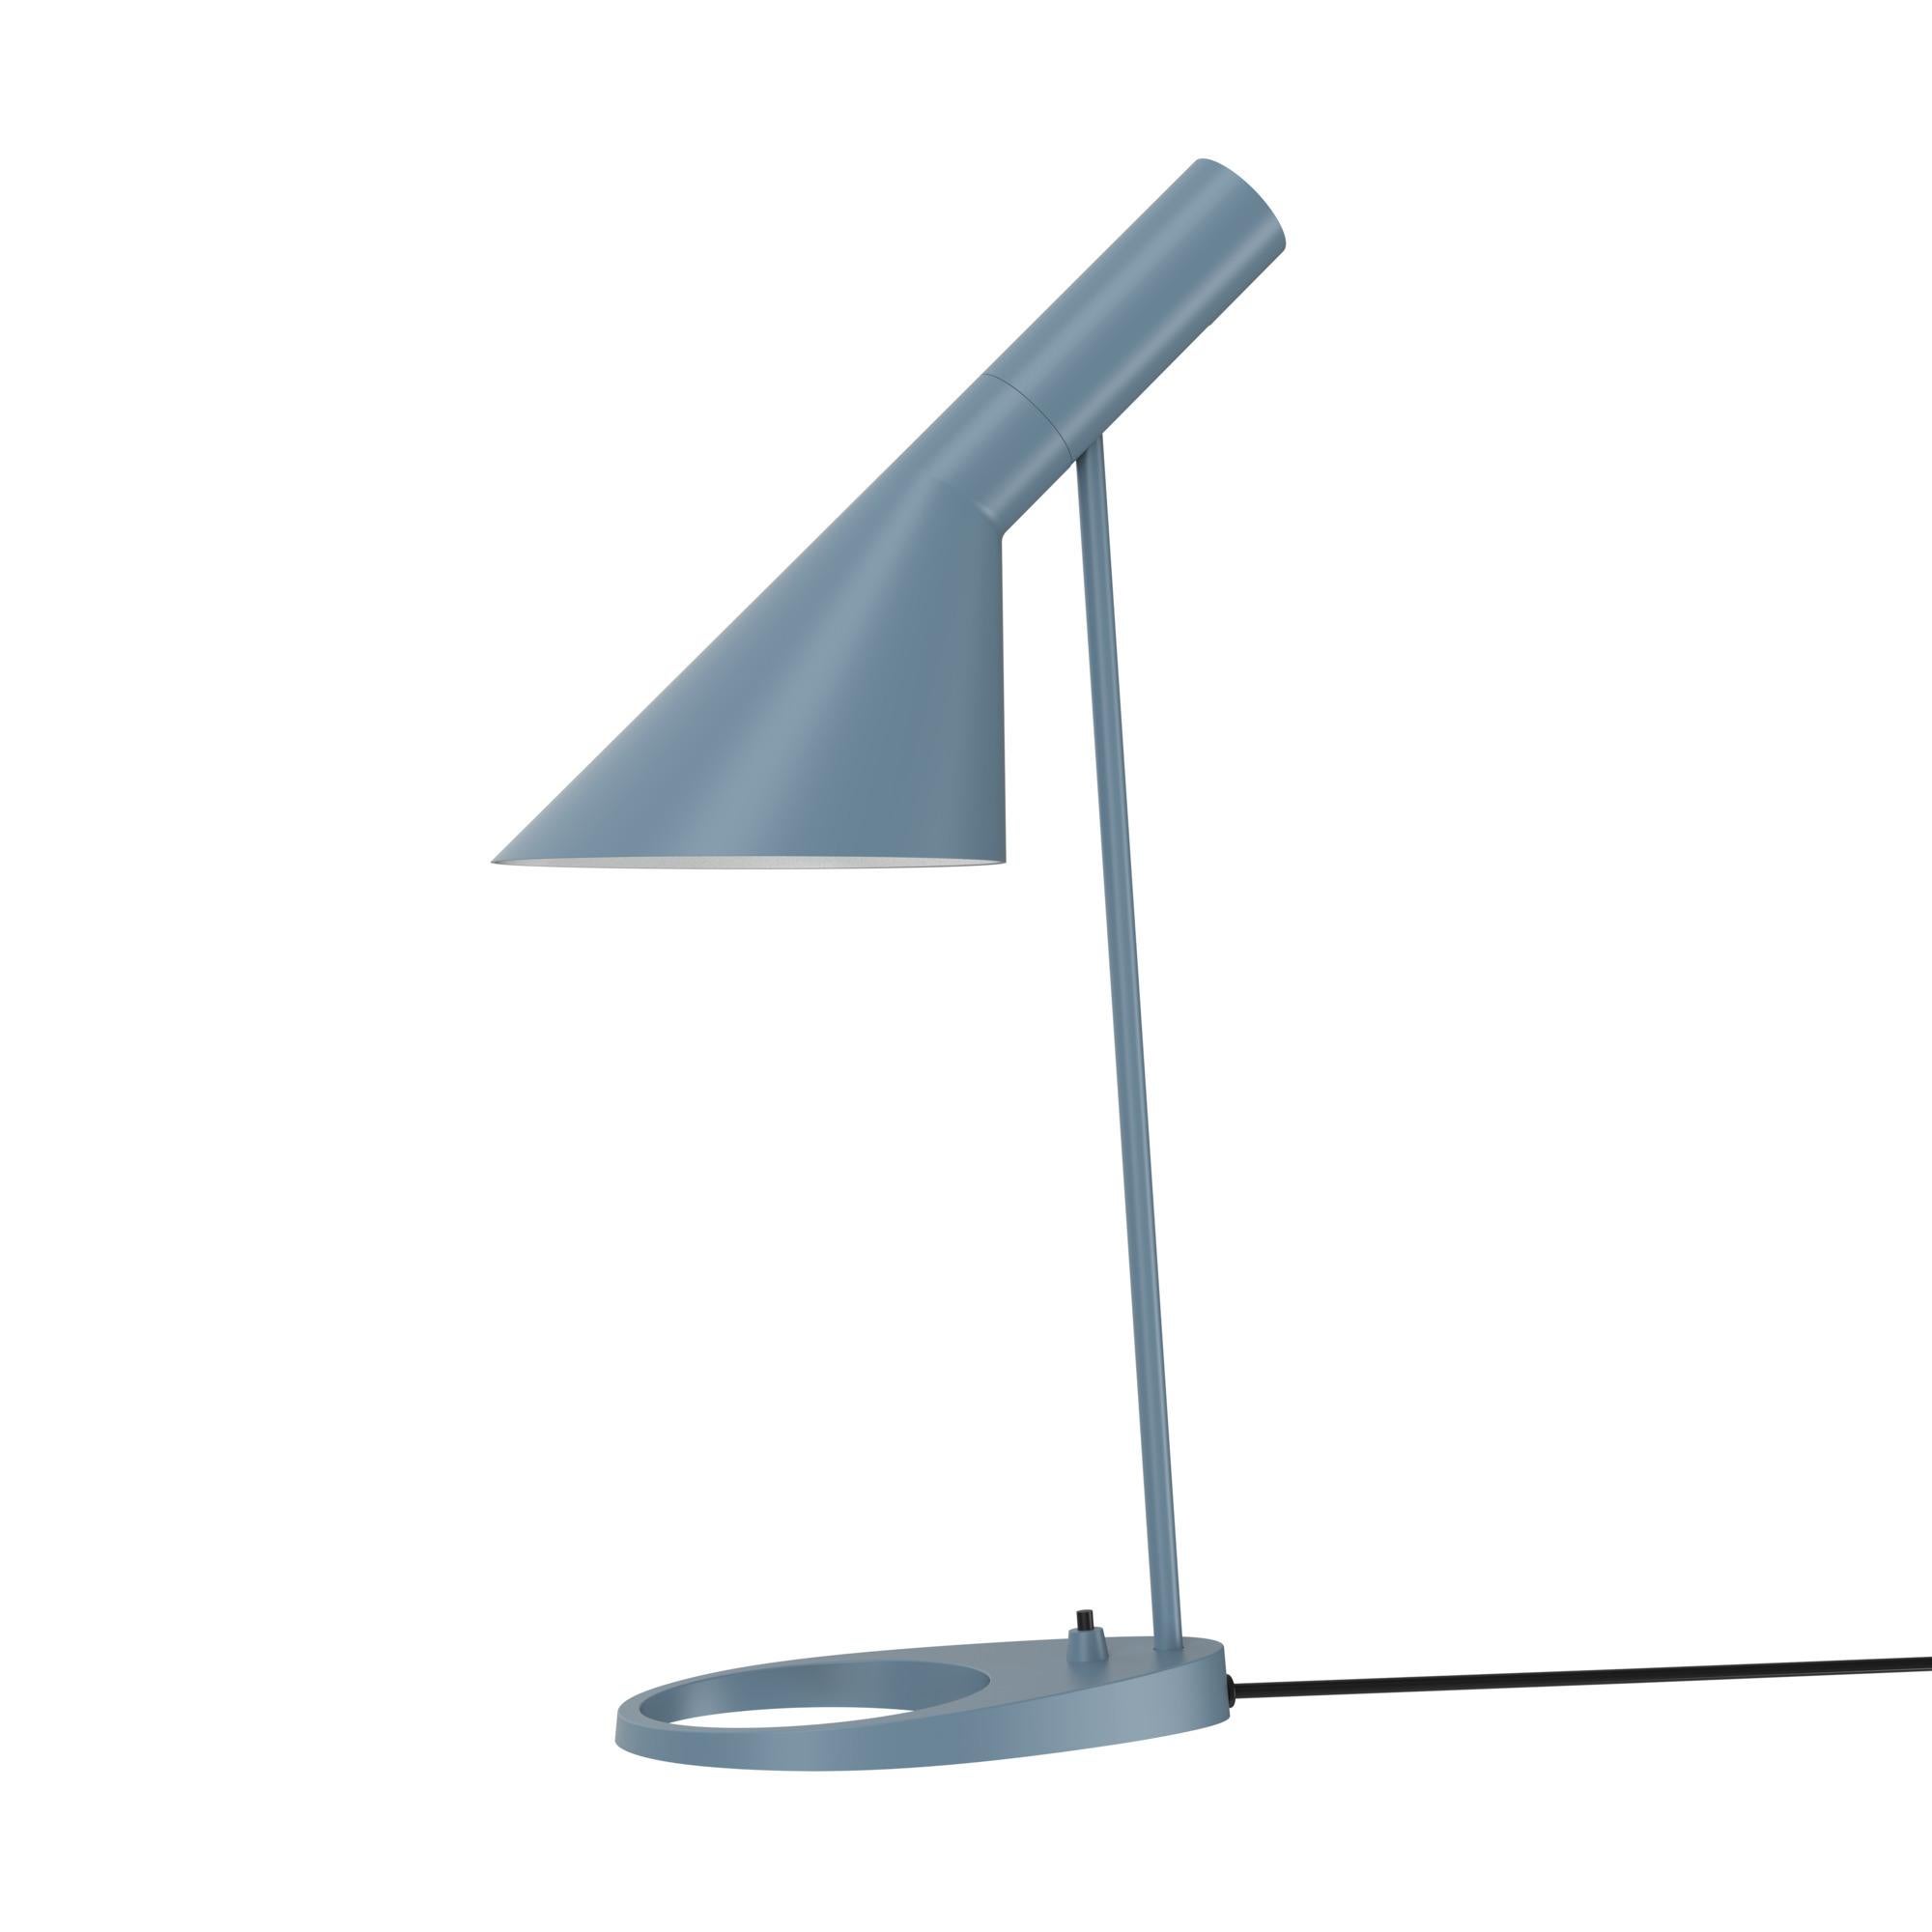 Arne Jacobsen AJ Table Lamp in Pale Petroleum for Louis Poulsen For Sale 2